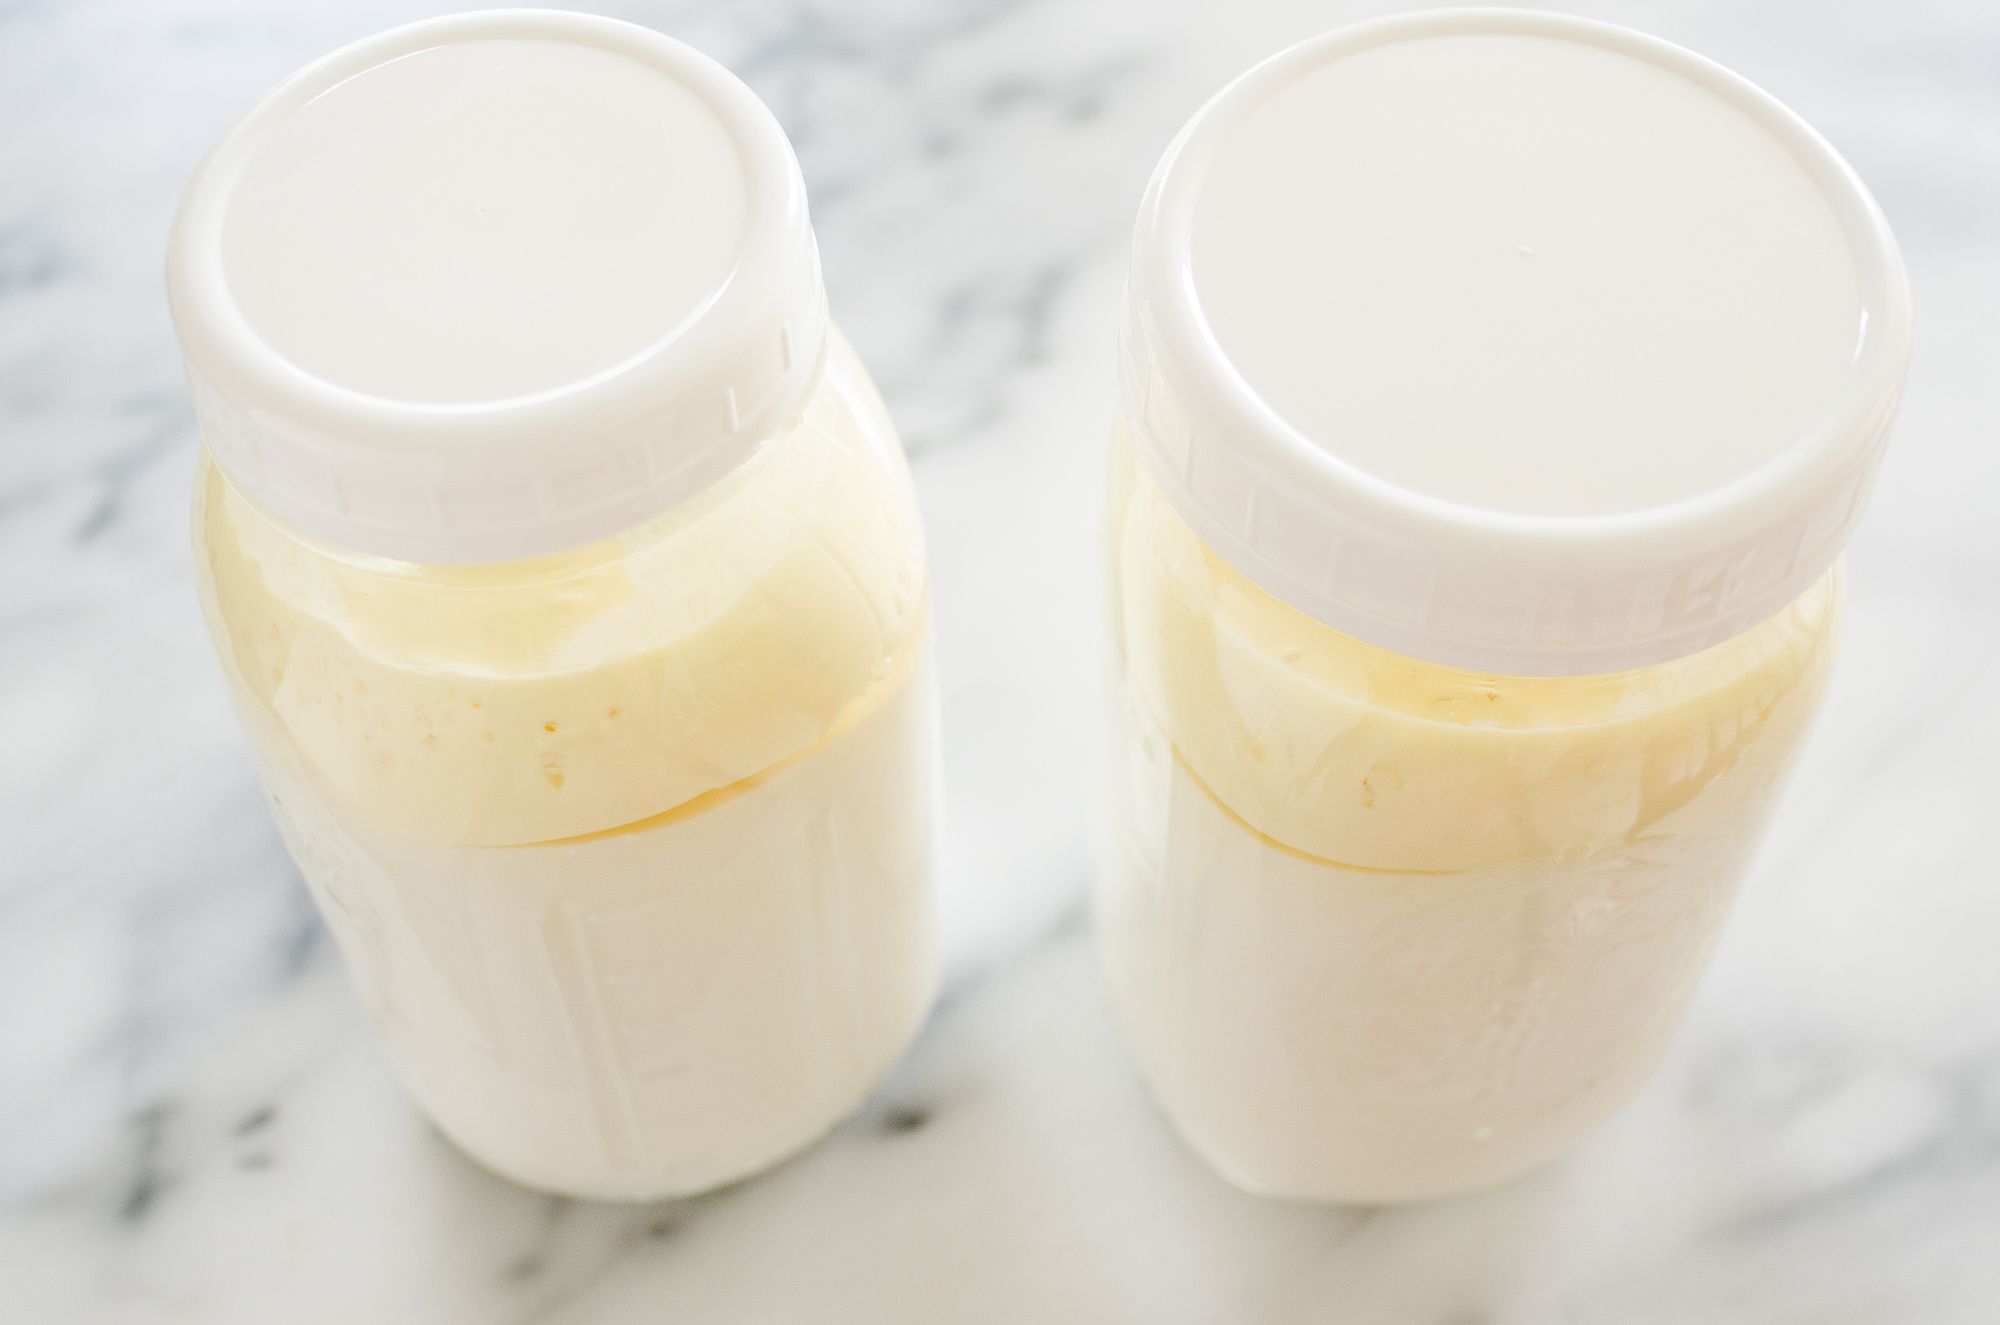 How to Make Homemade Kefir Using Milk